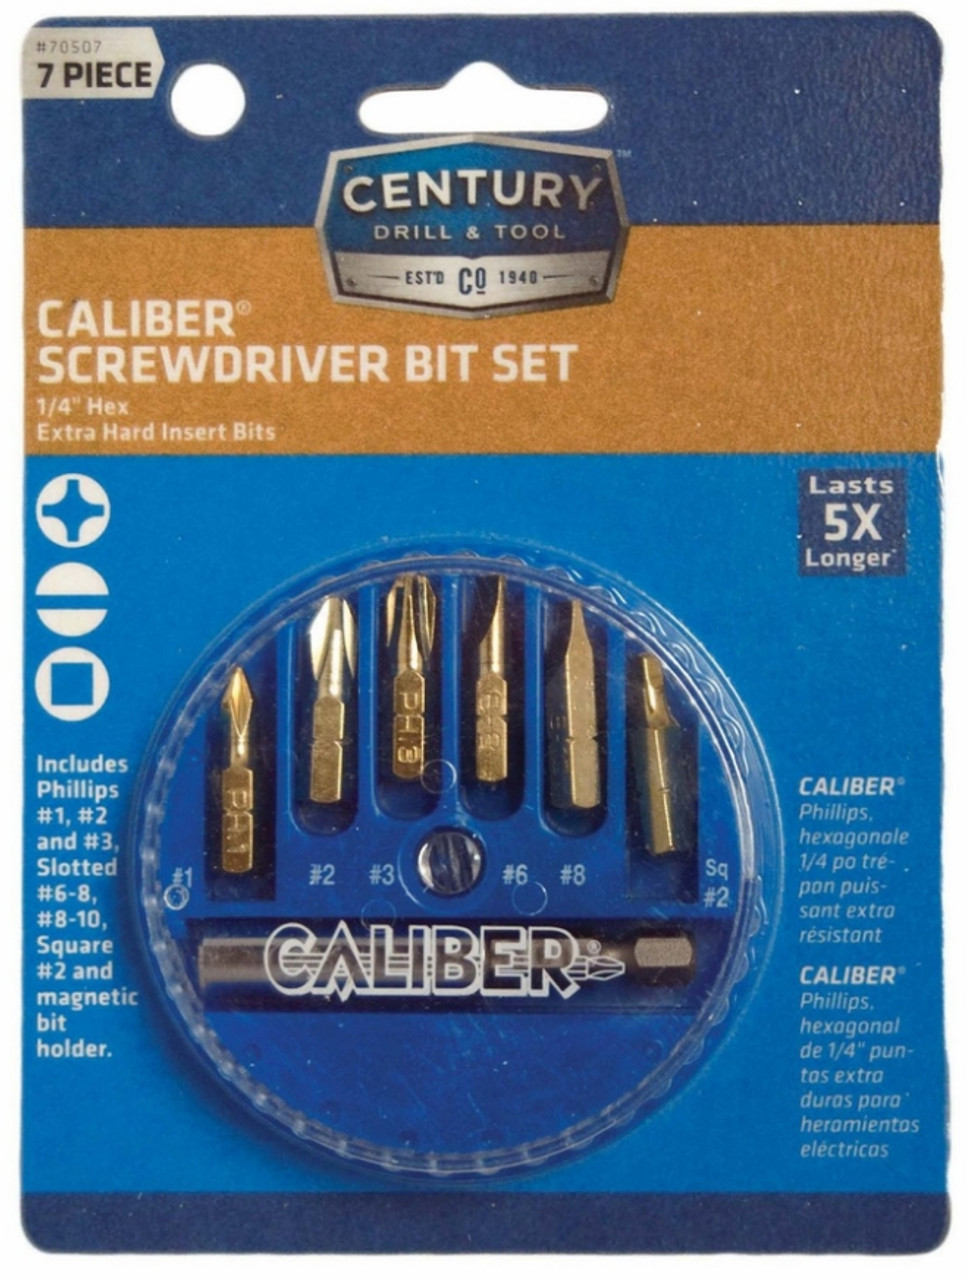 Century Drill and Tool 70507 Screwdriver Bit Set, 7-Piece